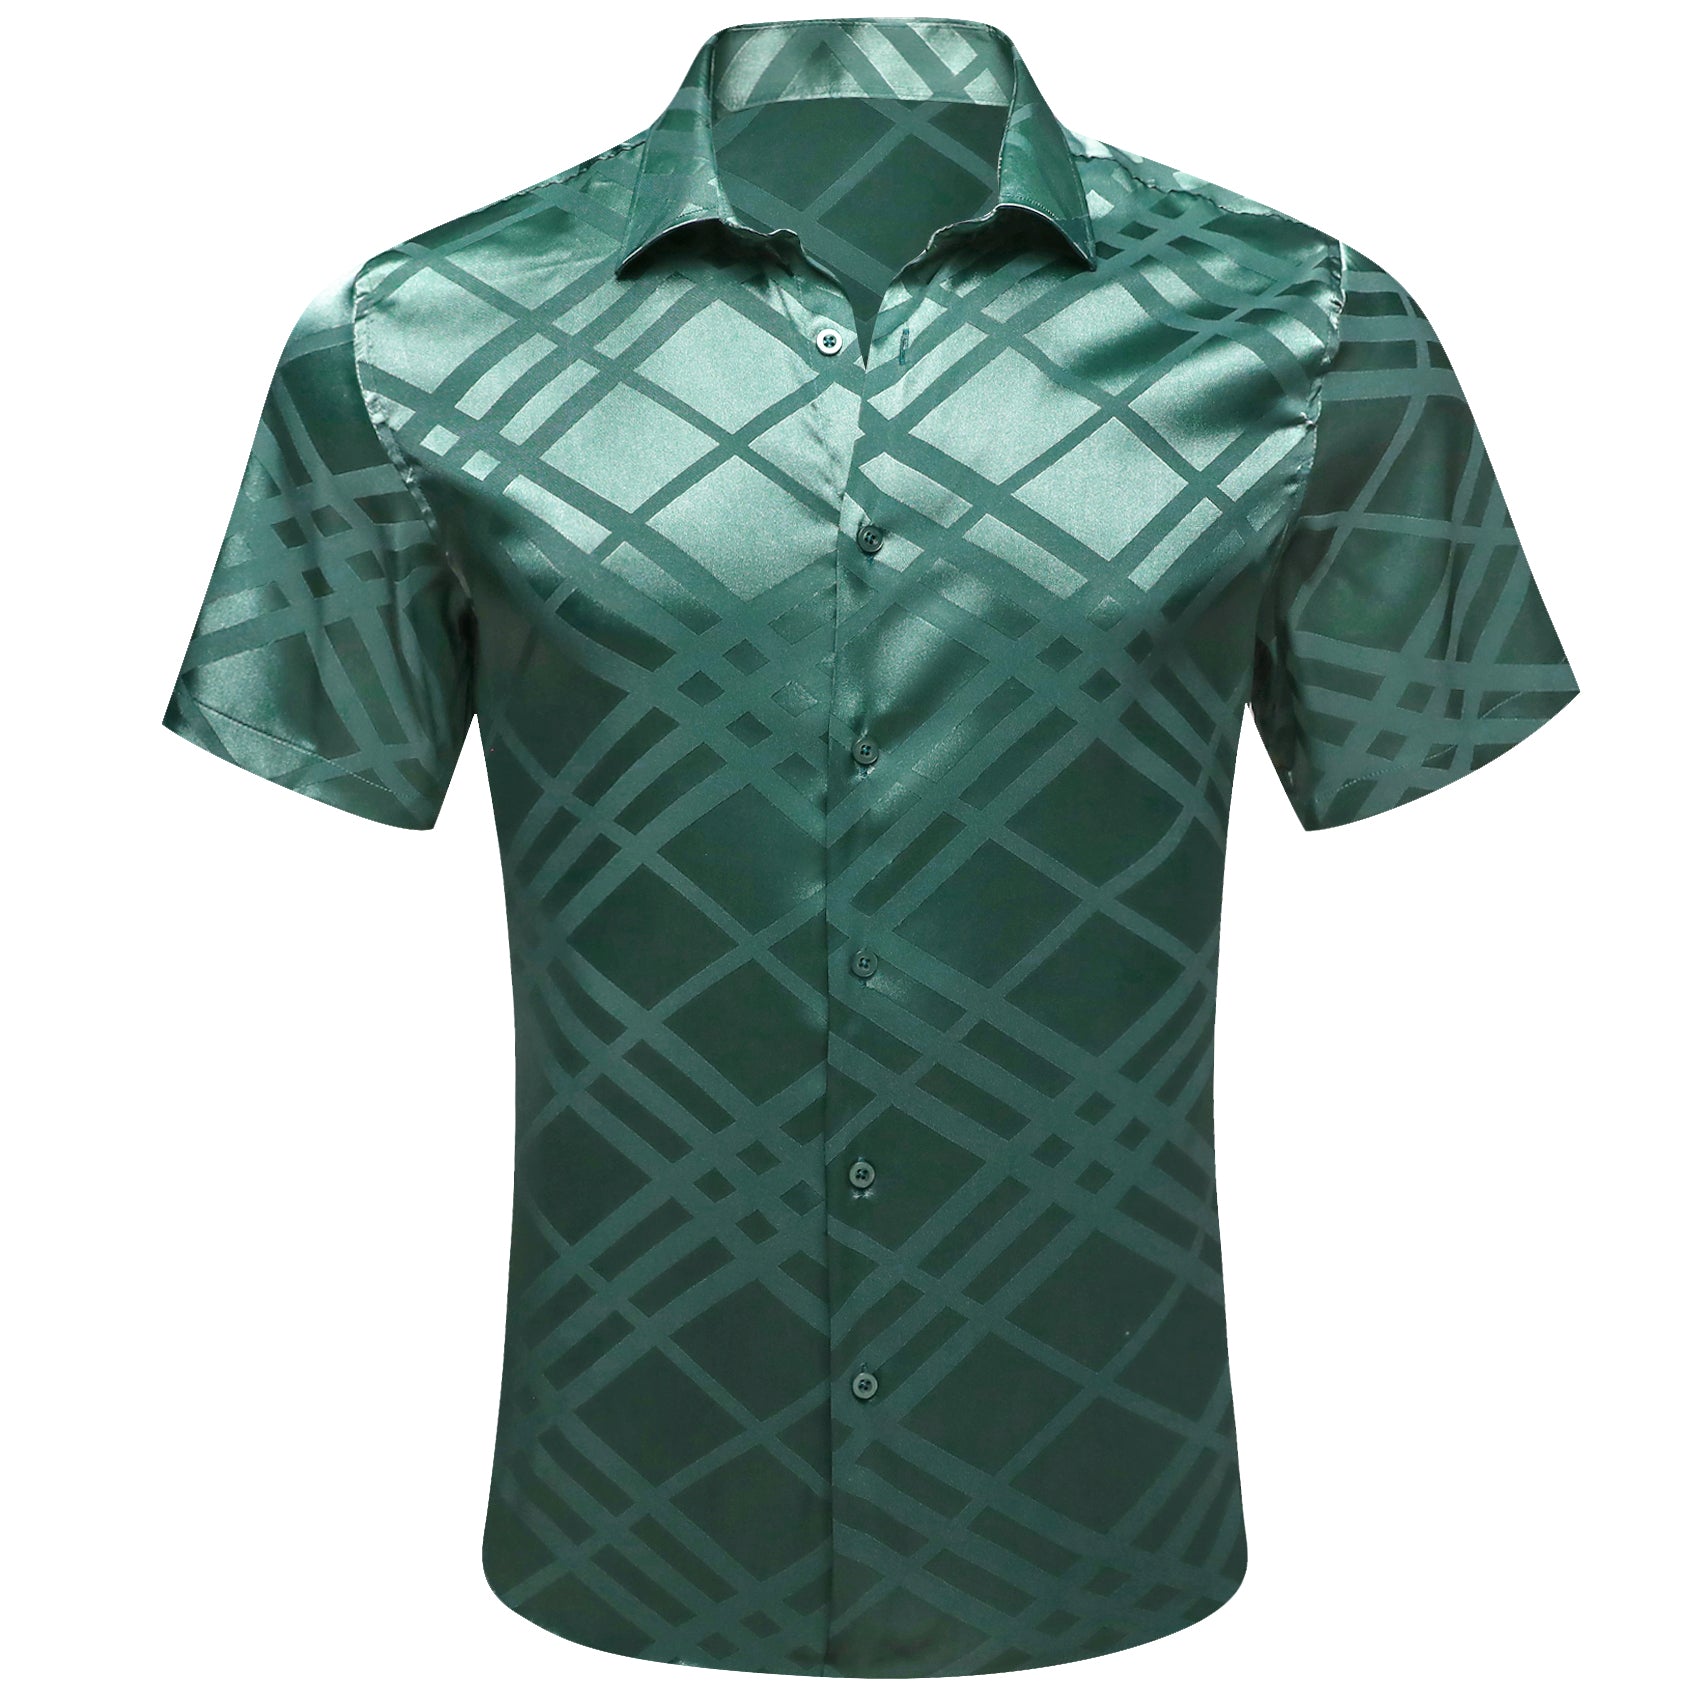 Barry.wang New Green Plaid Short Sleeves Shirt